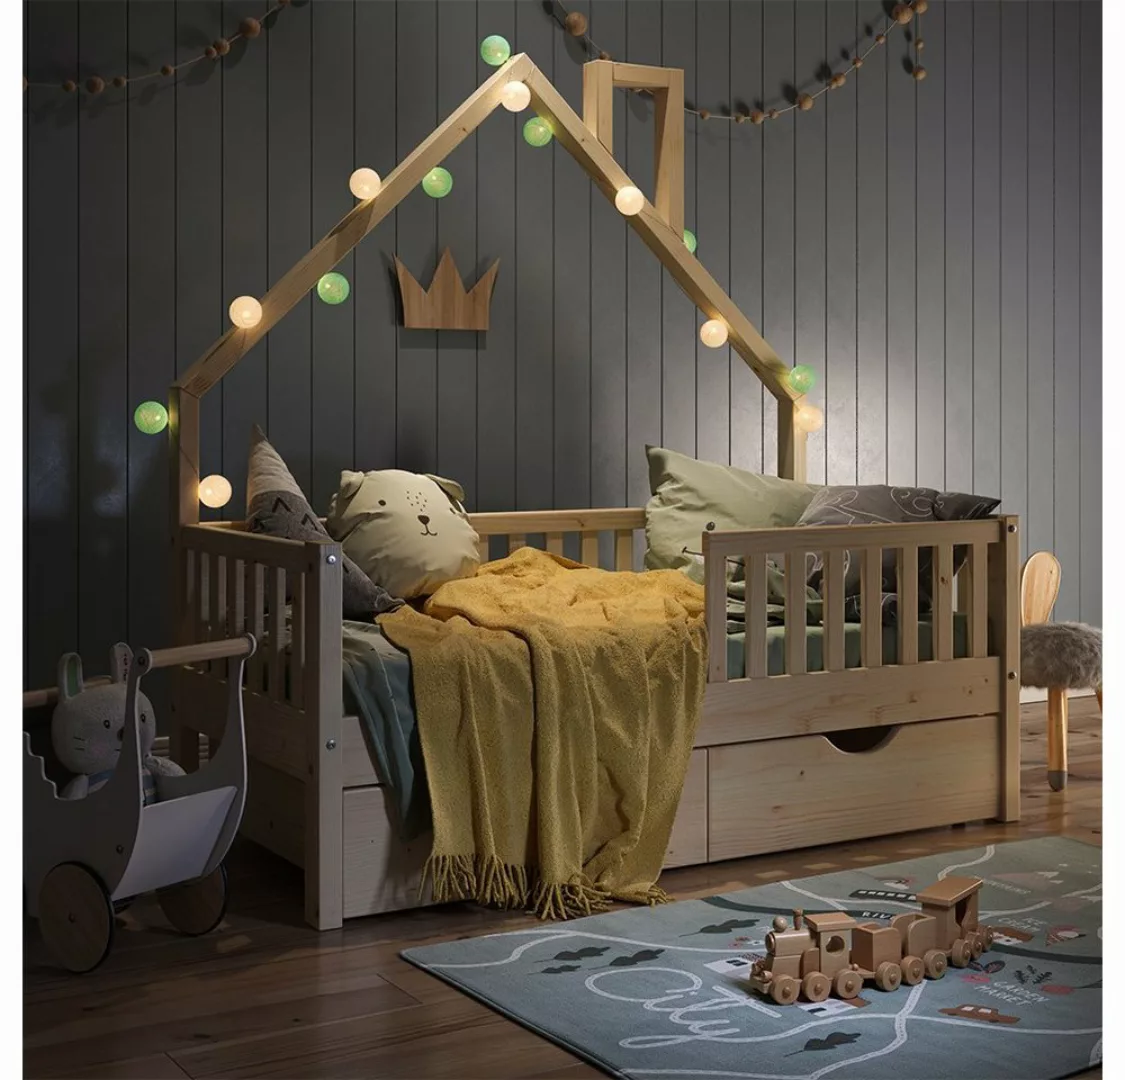 VitaliSpa® Hausbett Kinderbett Spielbett Noemi 70x140cm Natur Schubladen günstig online kaufen